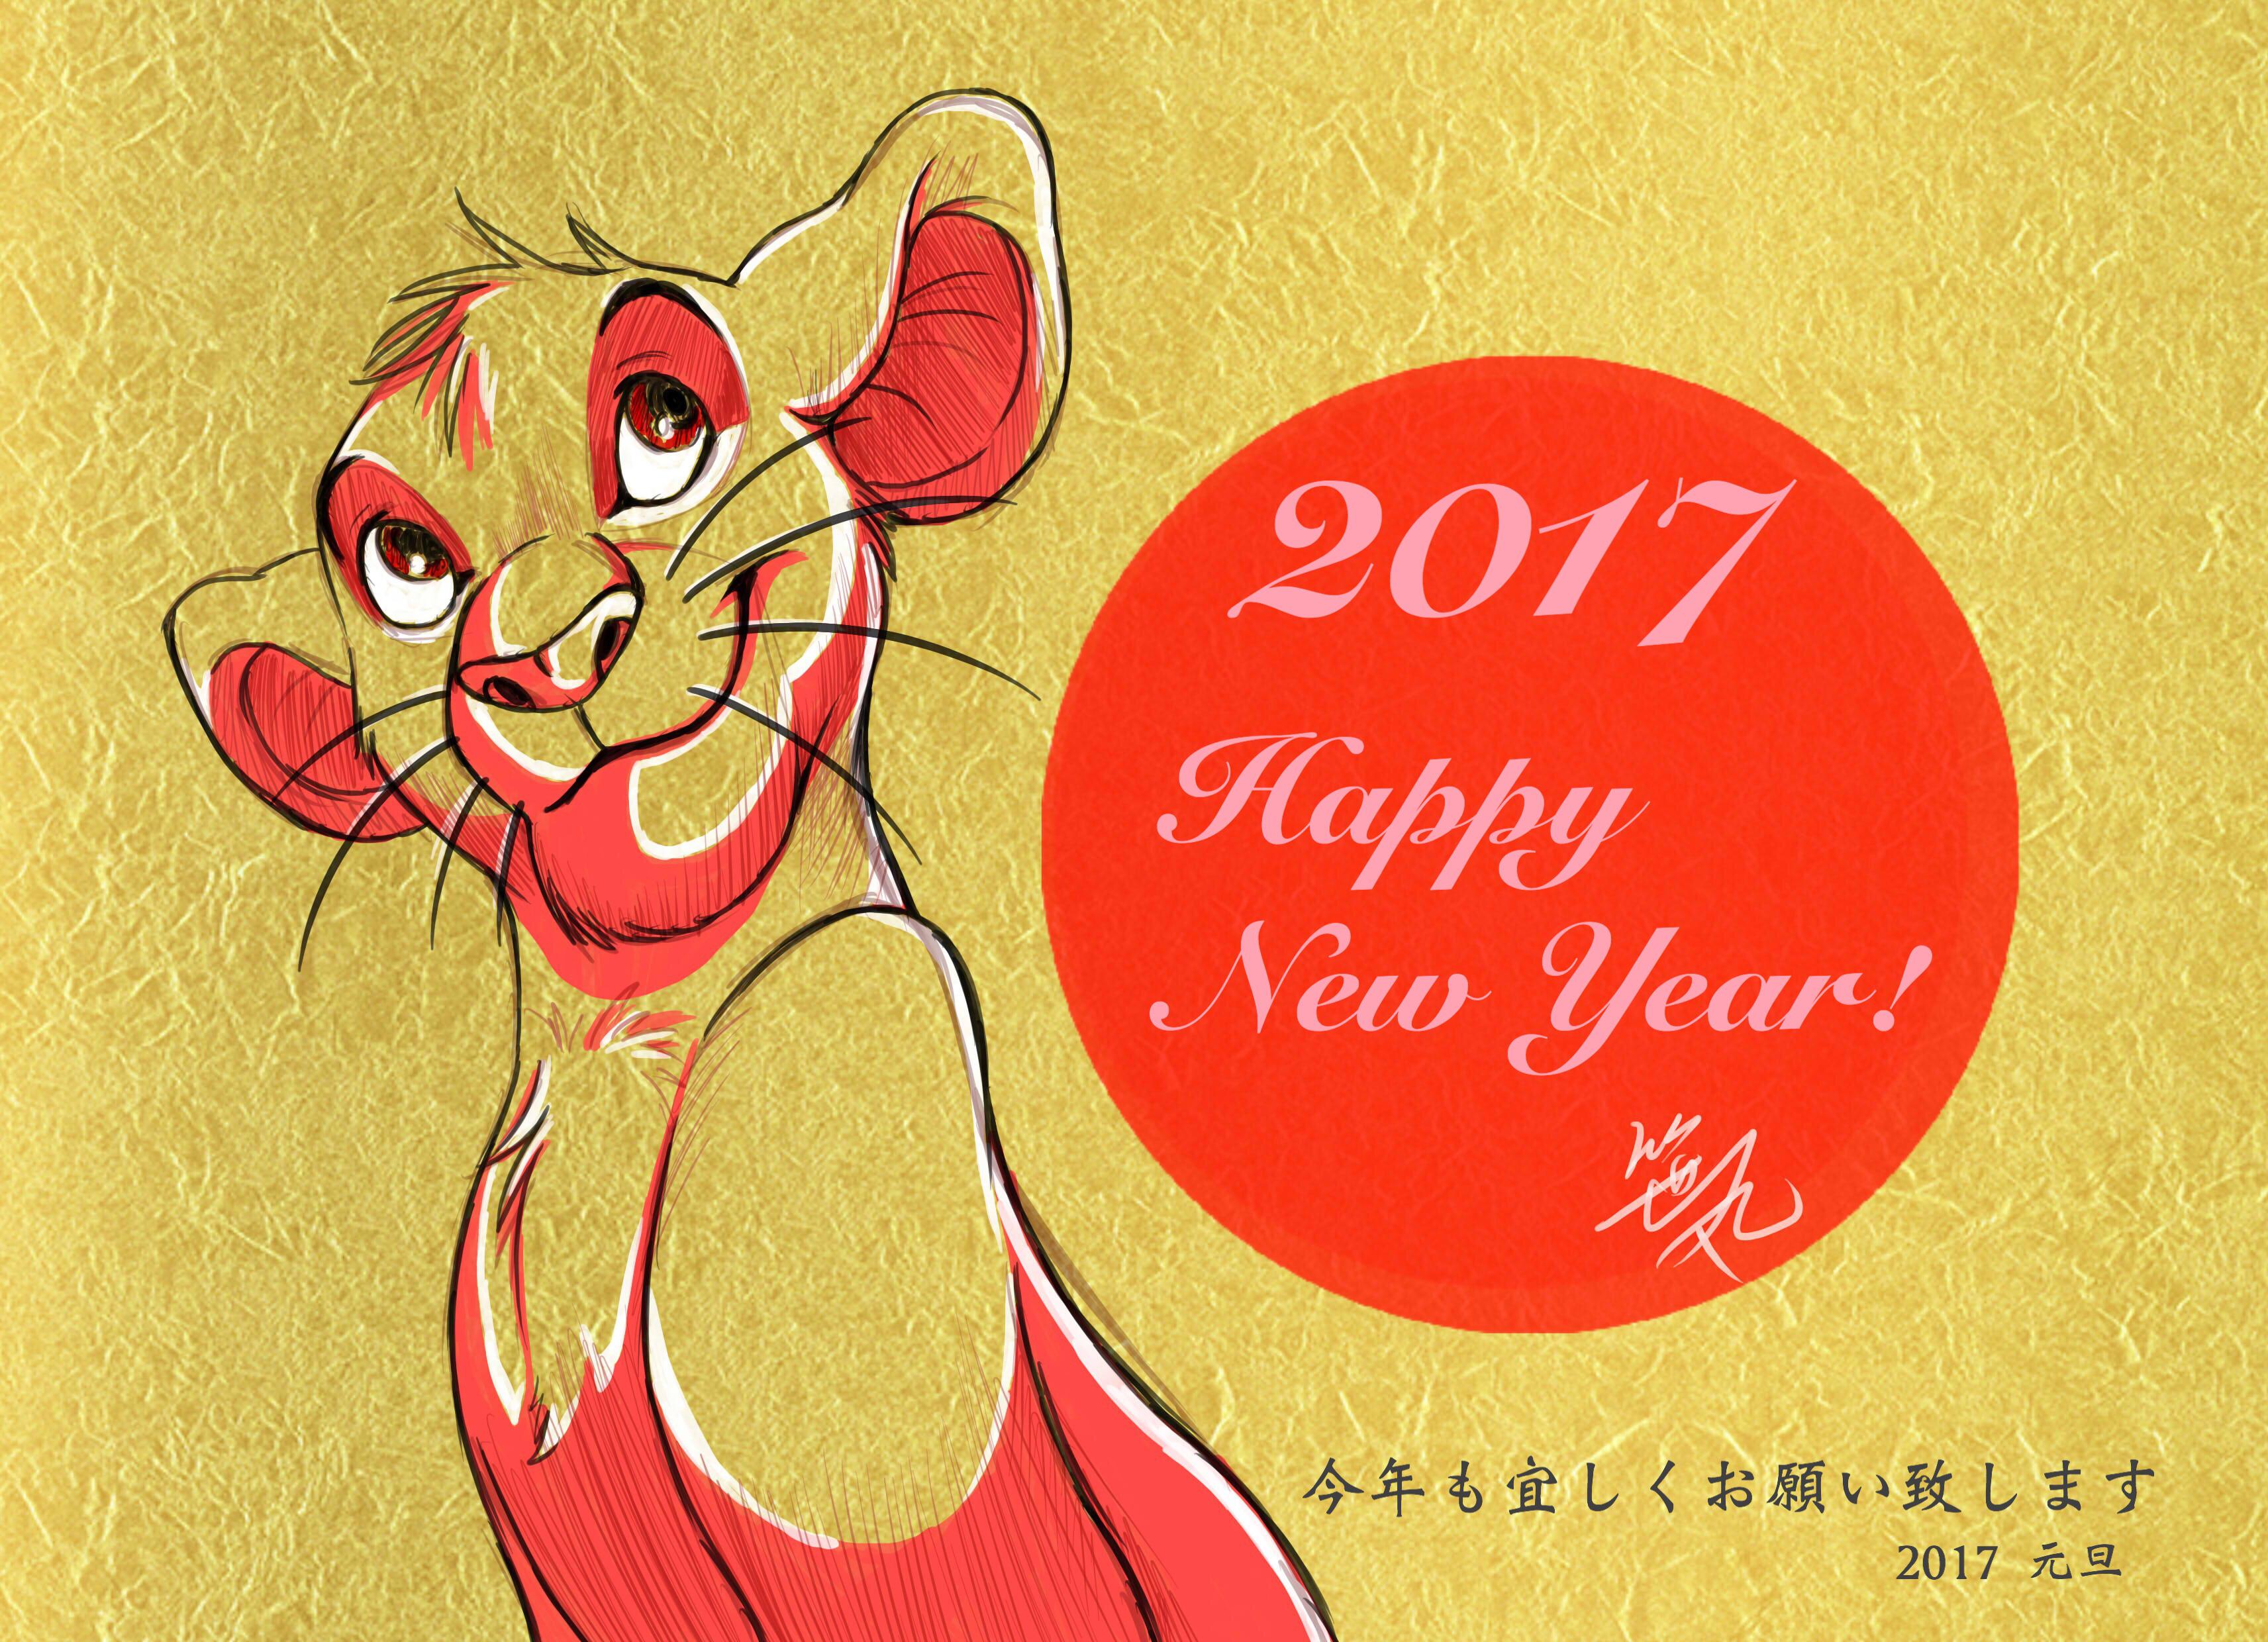 2017 simba happy new year插画图片壁纸